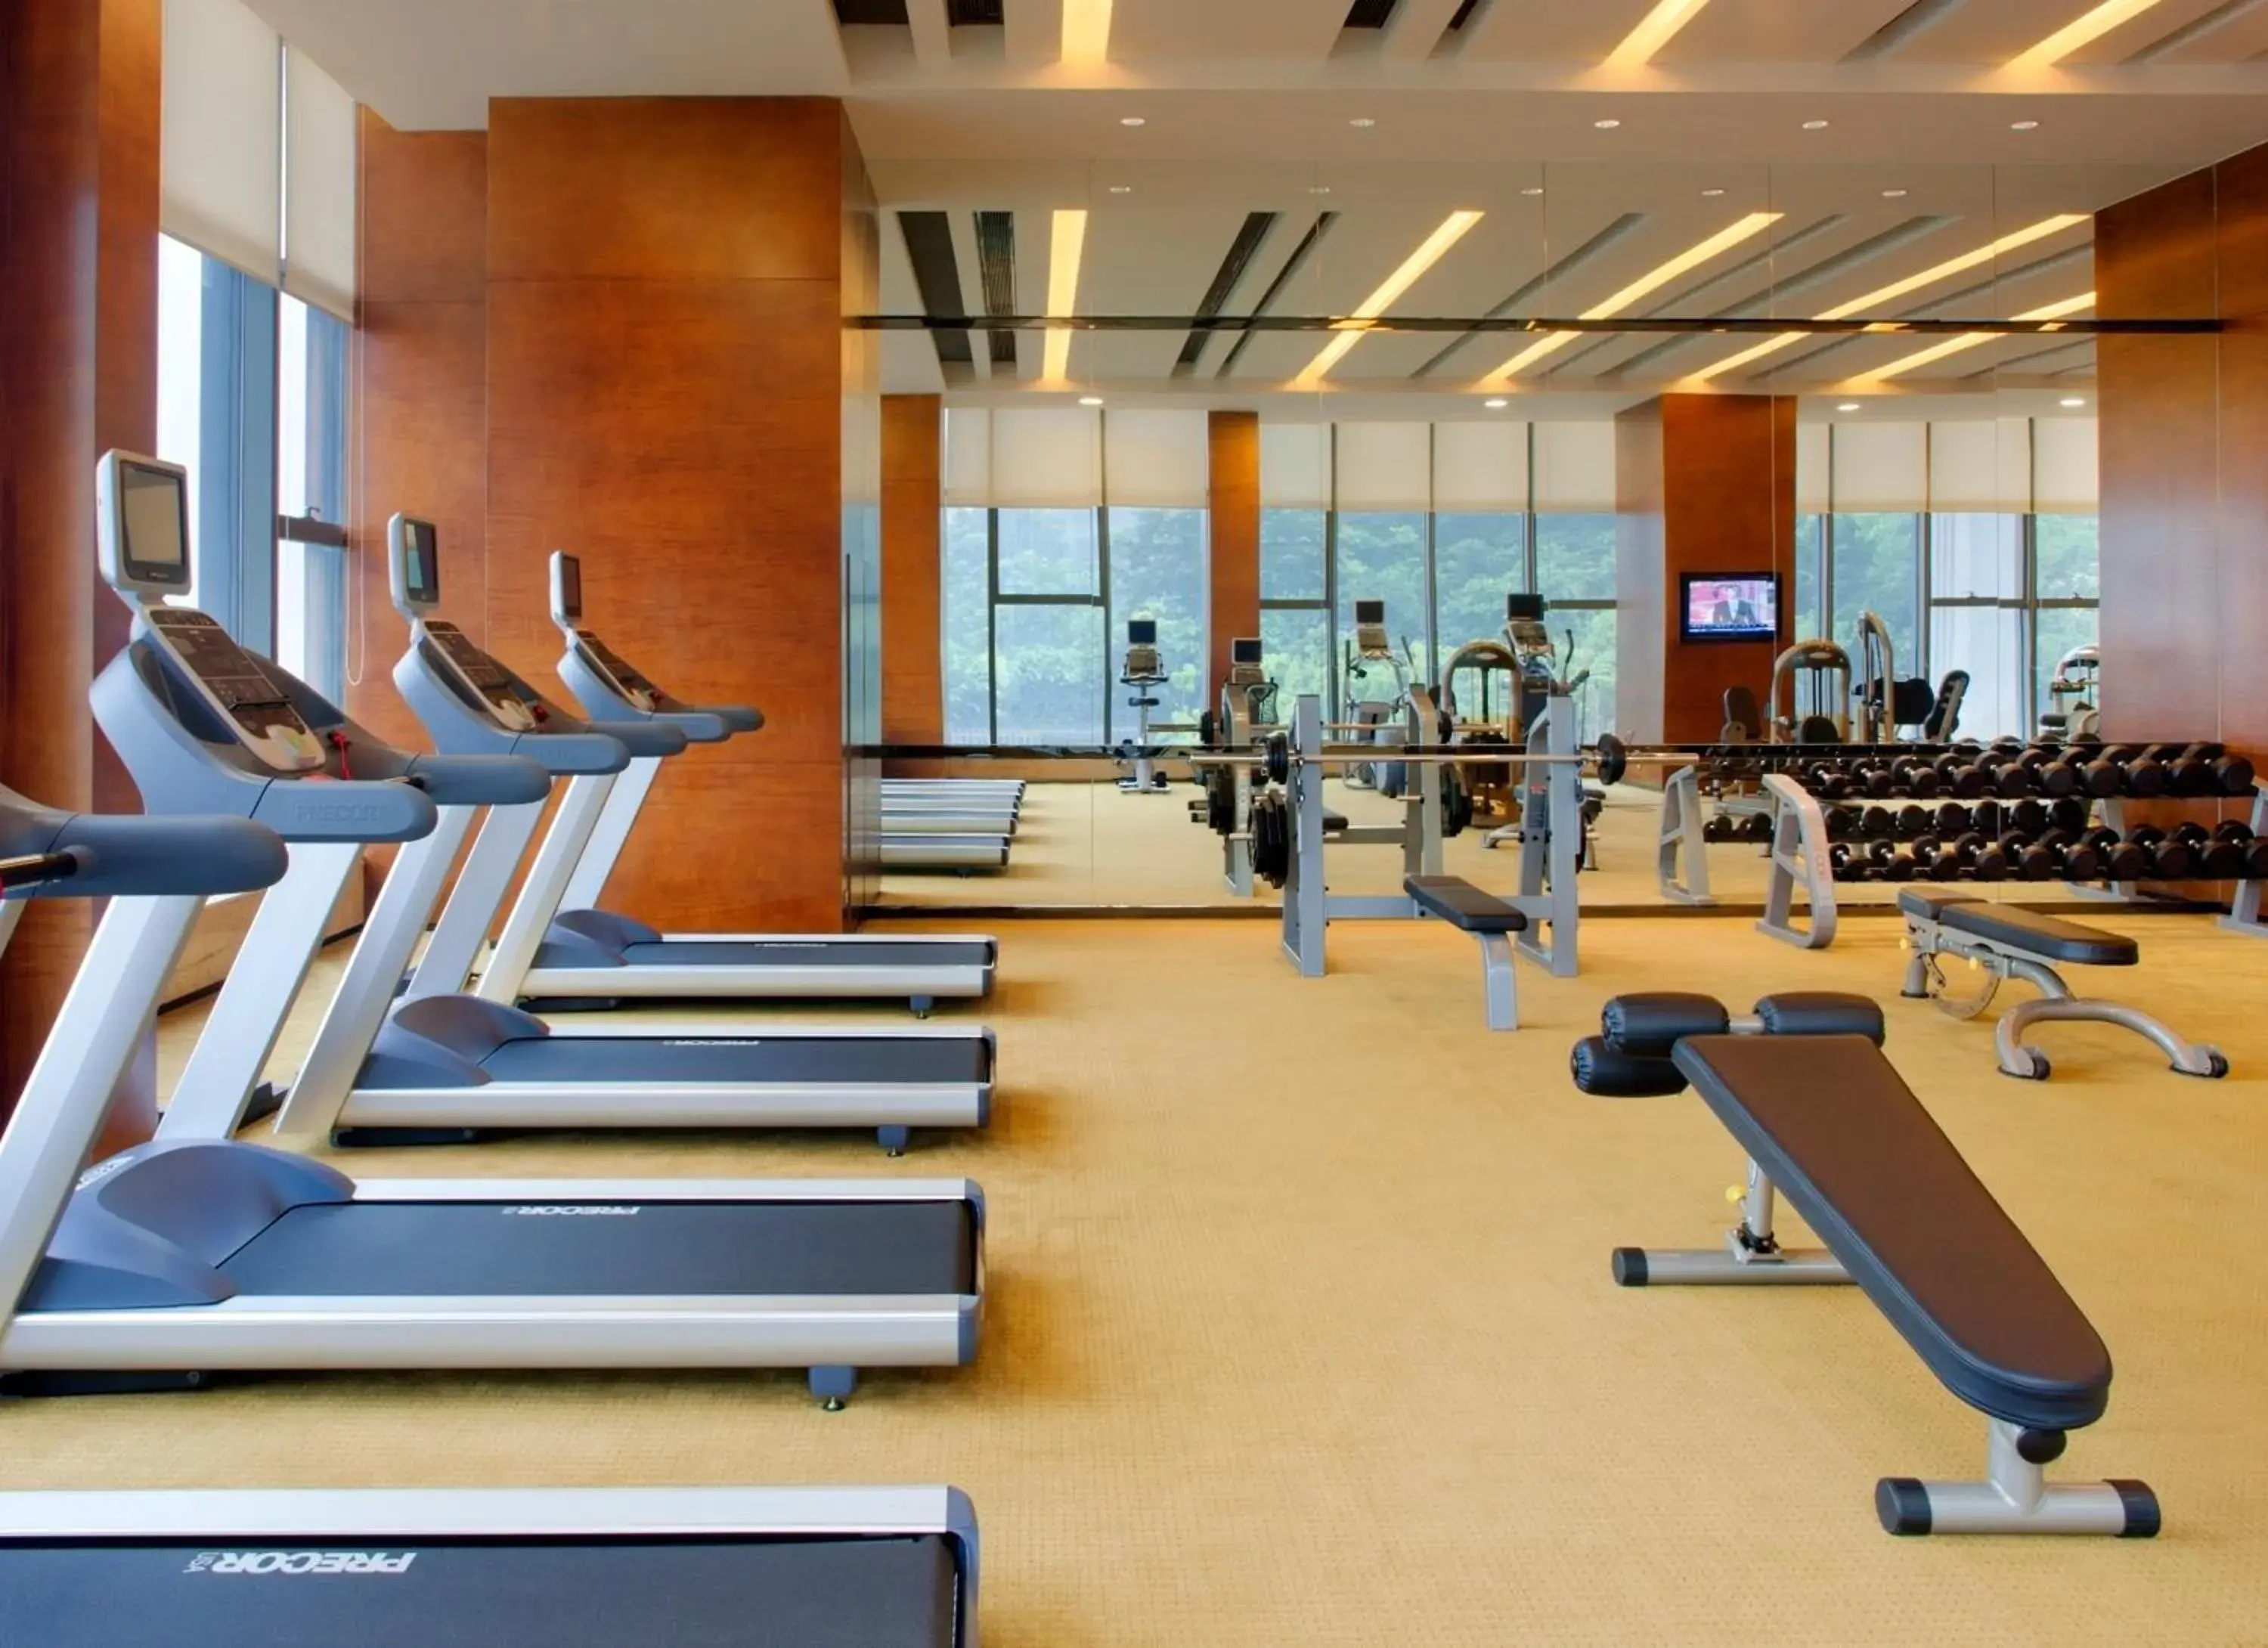 Fitness centre/facilities, Fitness Center/Facilities in Radisson Blu Plaza Chongqing